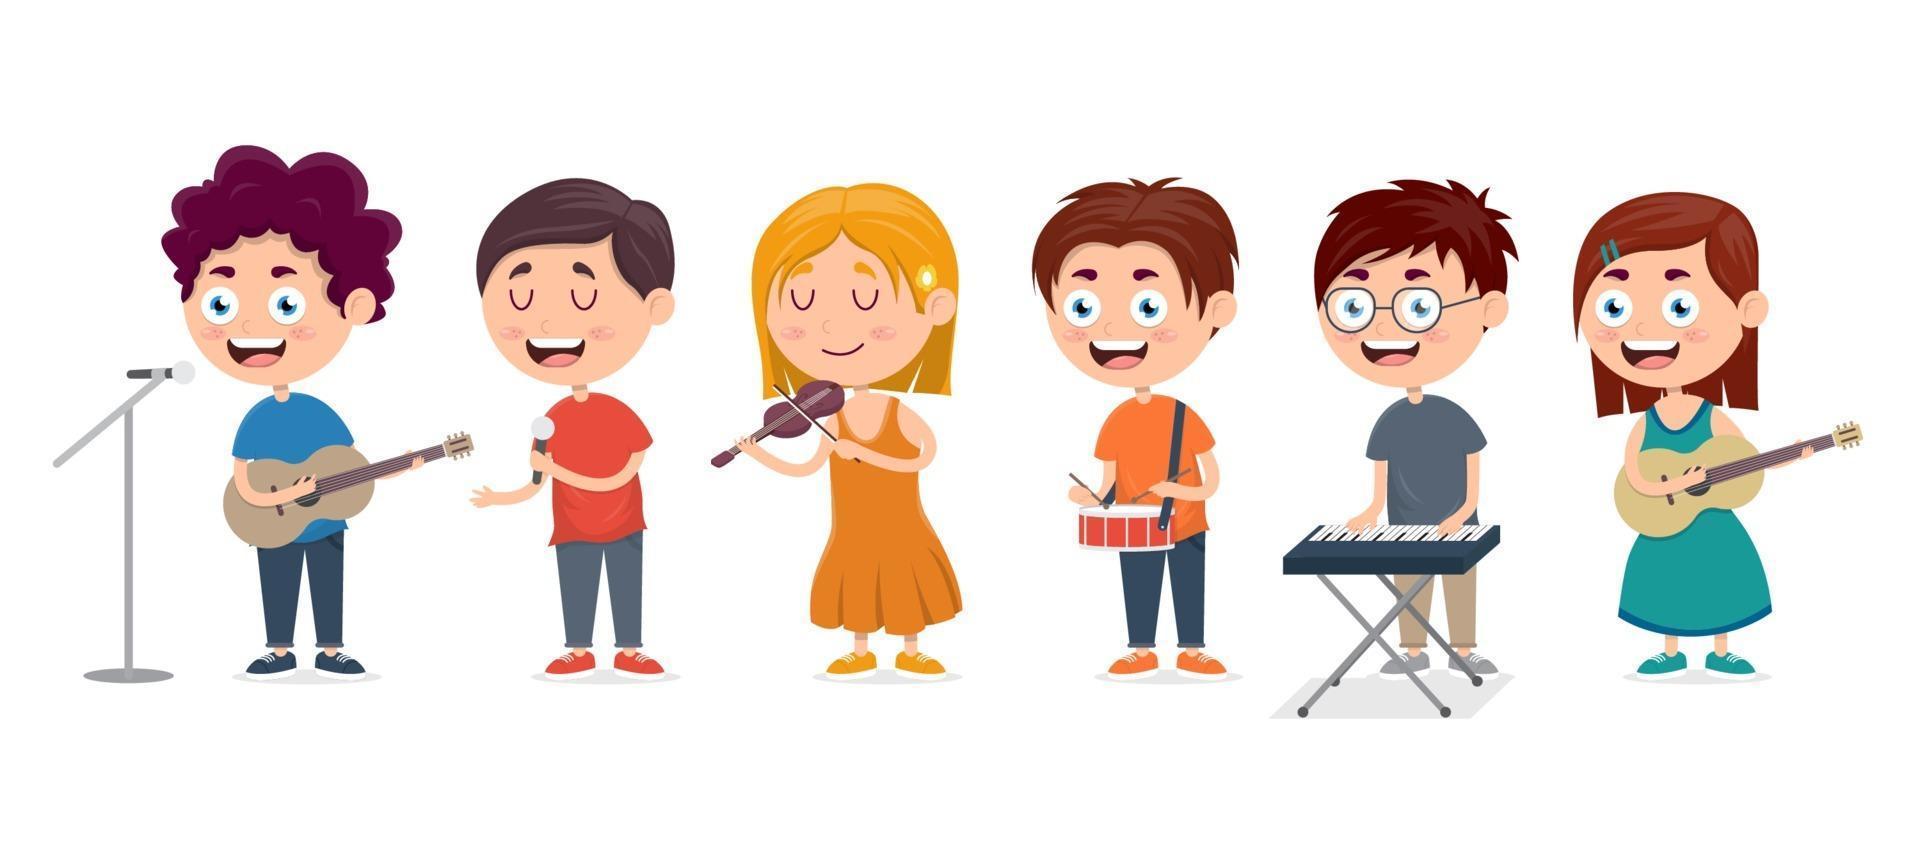 Children playing various music instrument illustration vector